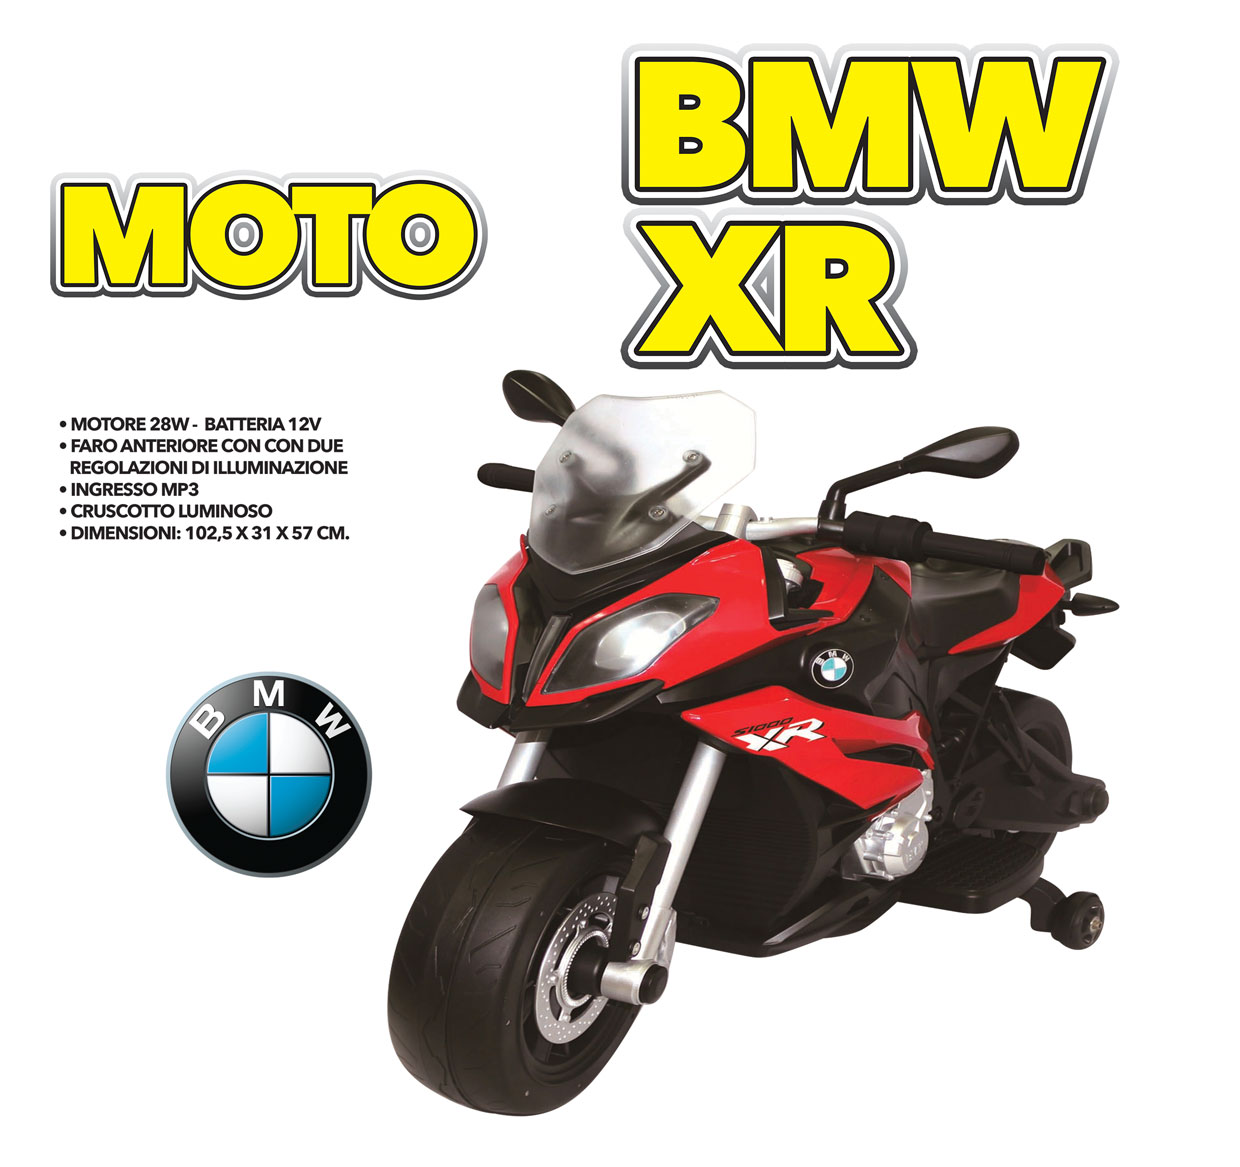 Moto Bmw Xr Rossa